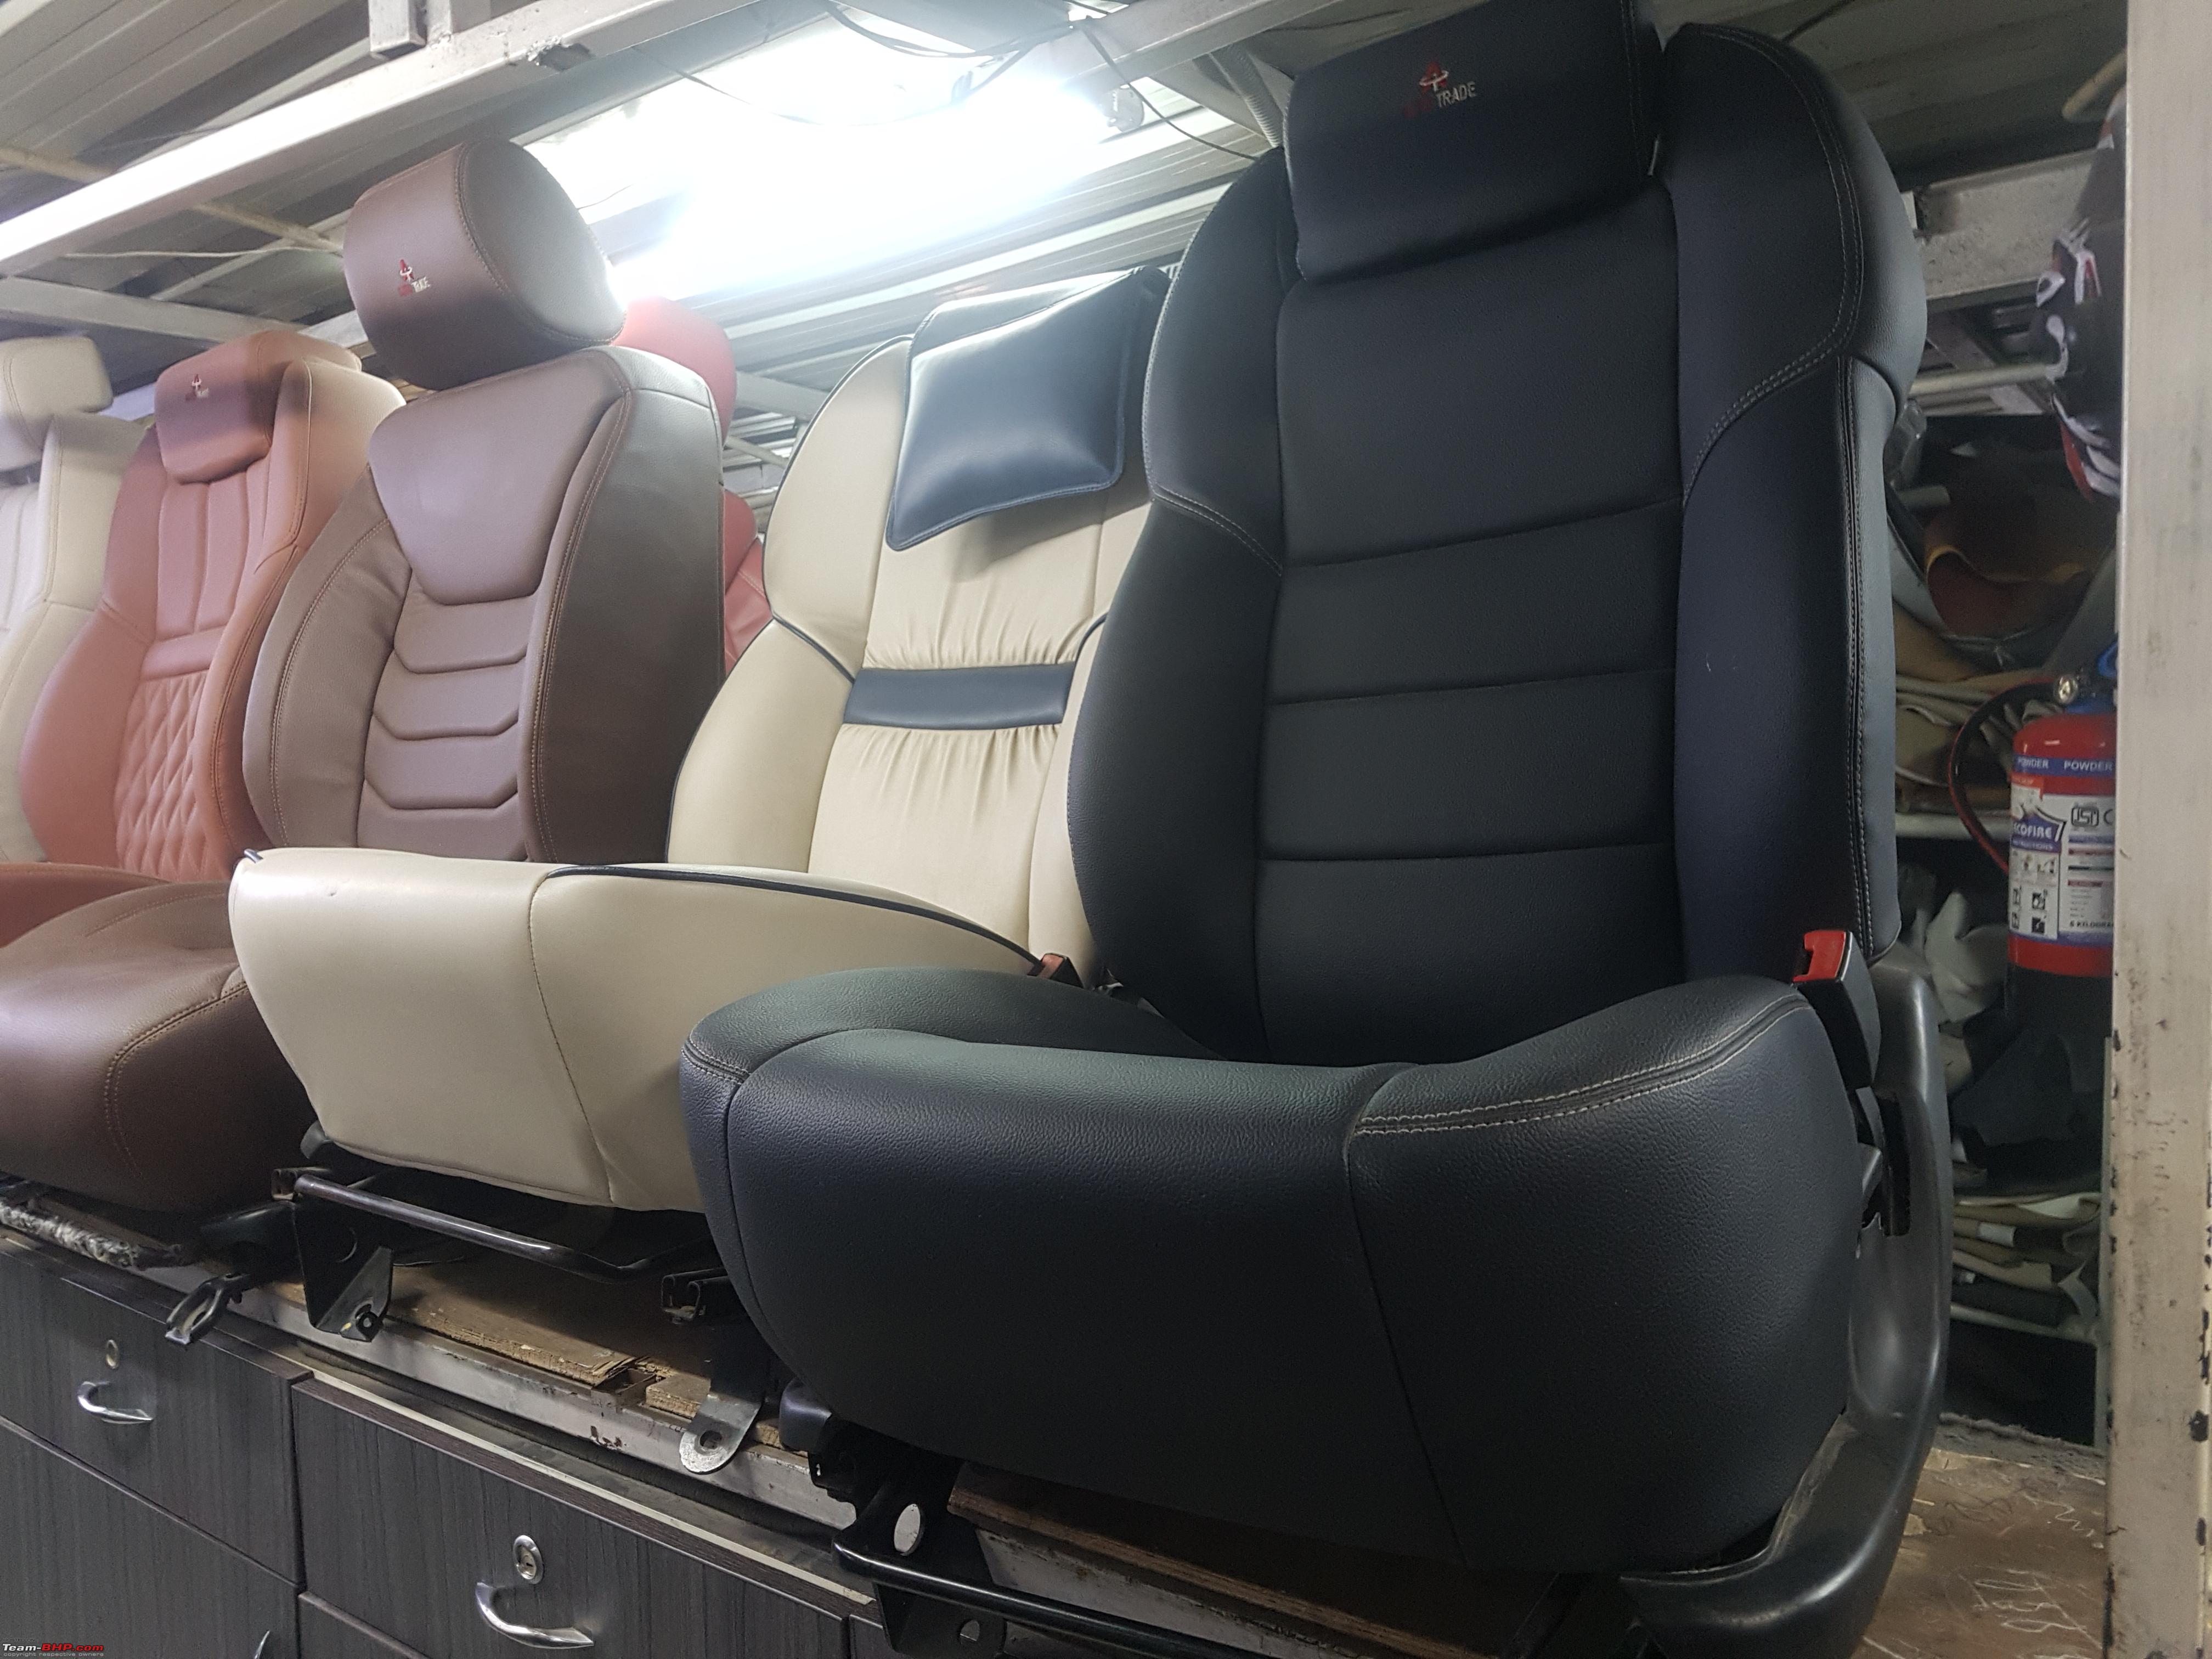 Leather Pegasus Premium Black And Orange Car Seat Covers at Rs 5999/set in  Delhi